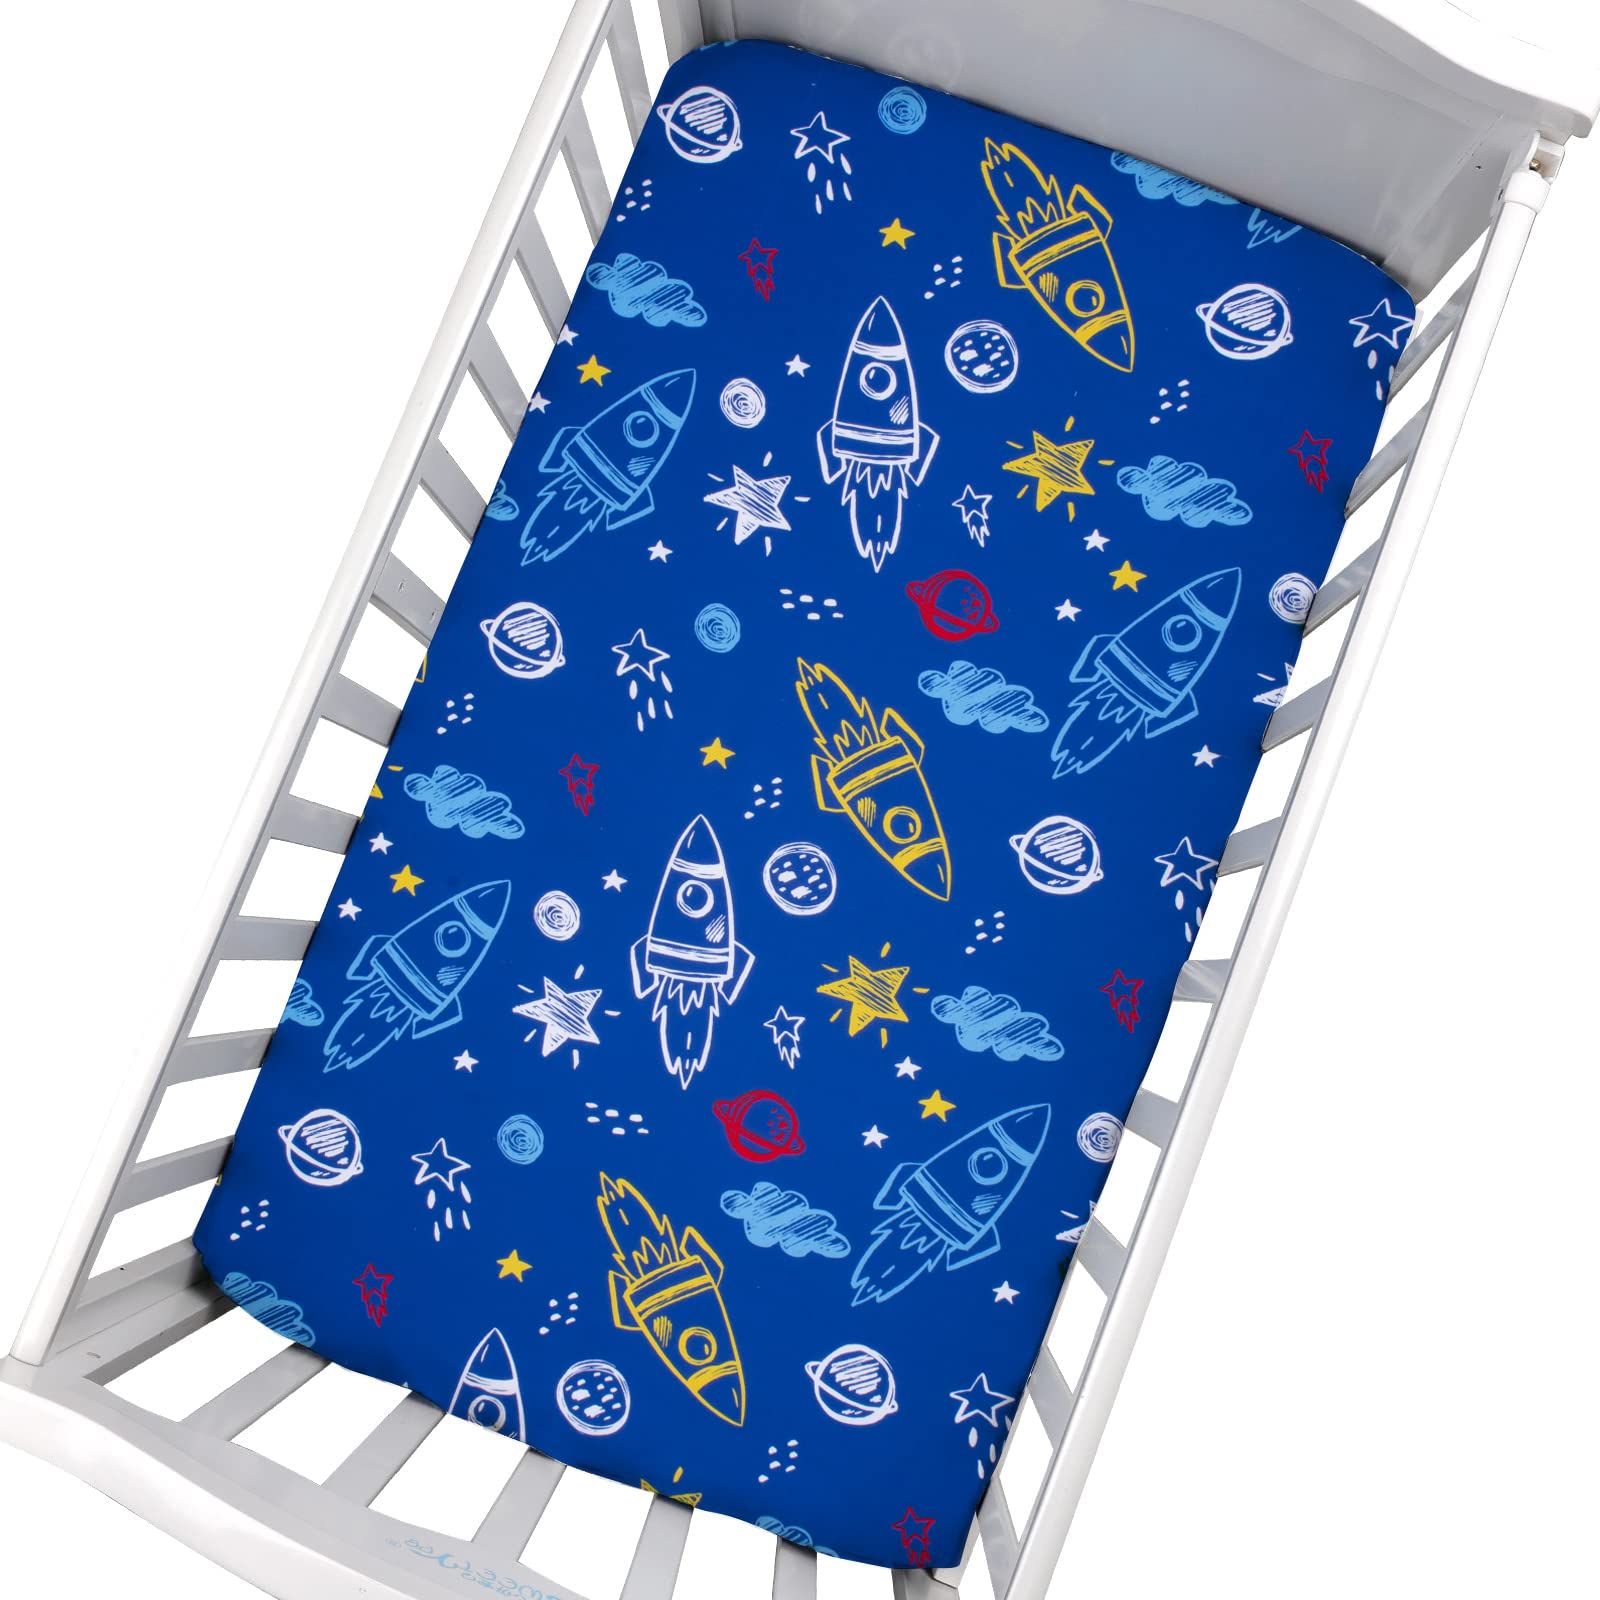 UOMNY Toddler Bedding - Kids Pillowcase for Children Bedding - Fitted Crib Sheet Standard Size Nursery Bedding Sheet(Blue Dinosaur)